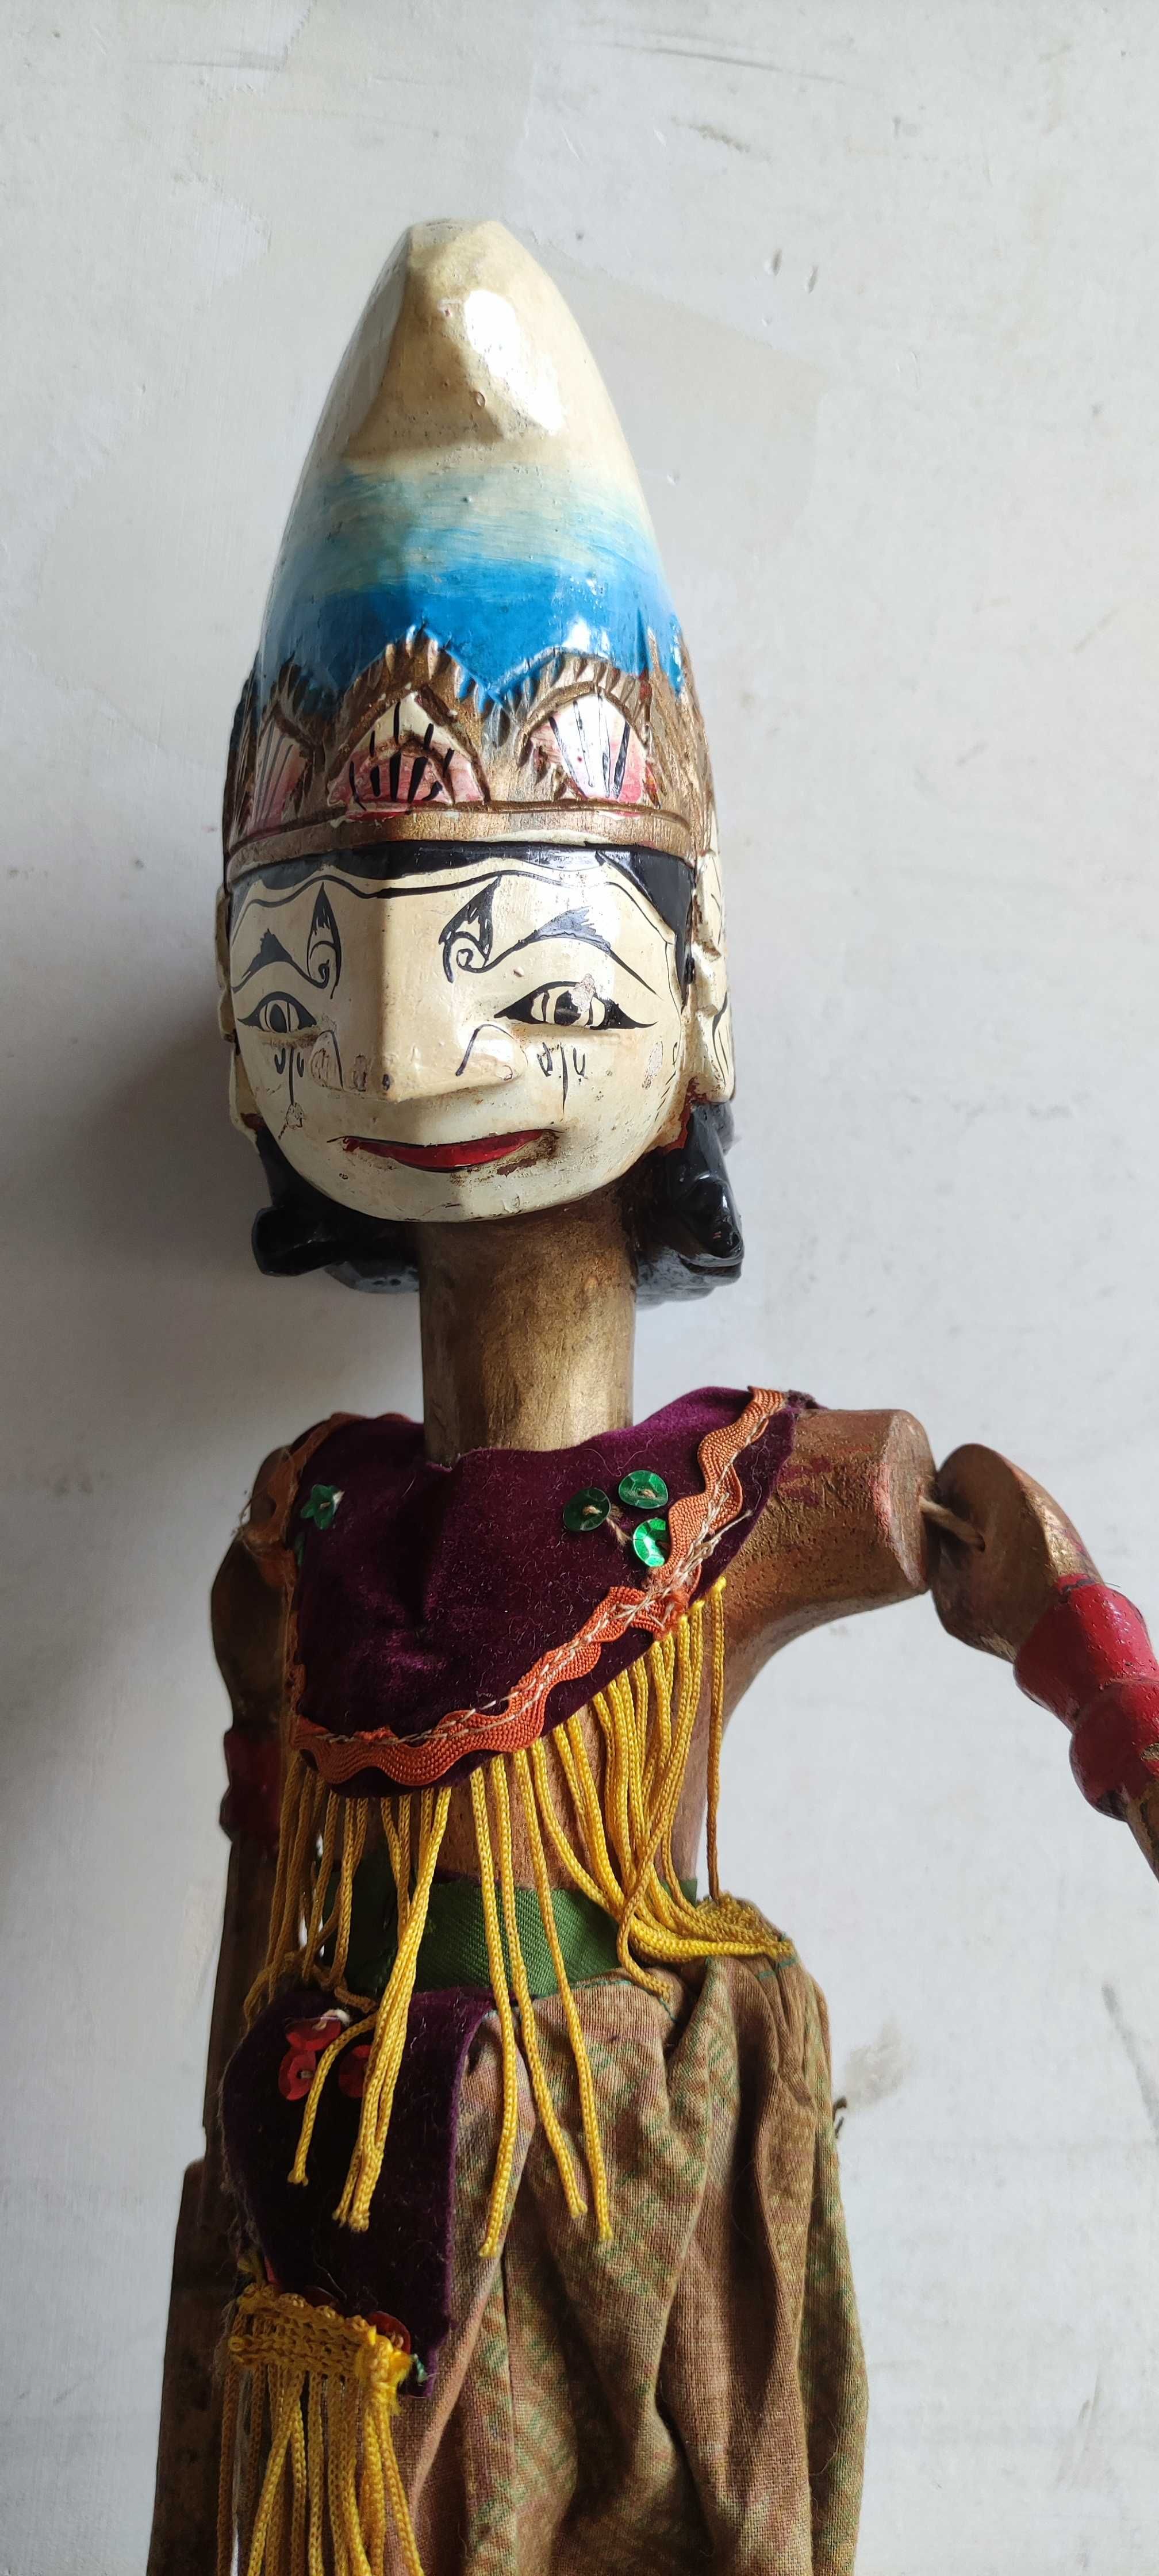 Antyczna lalka teatralna Wayang golek